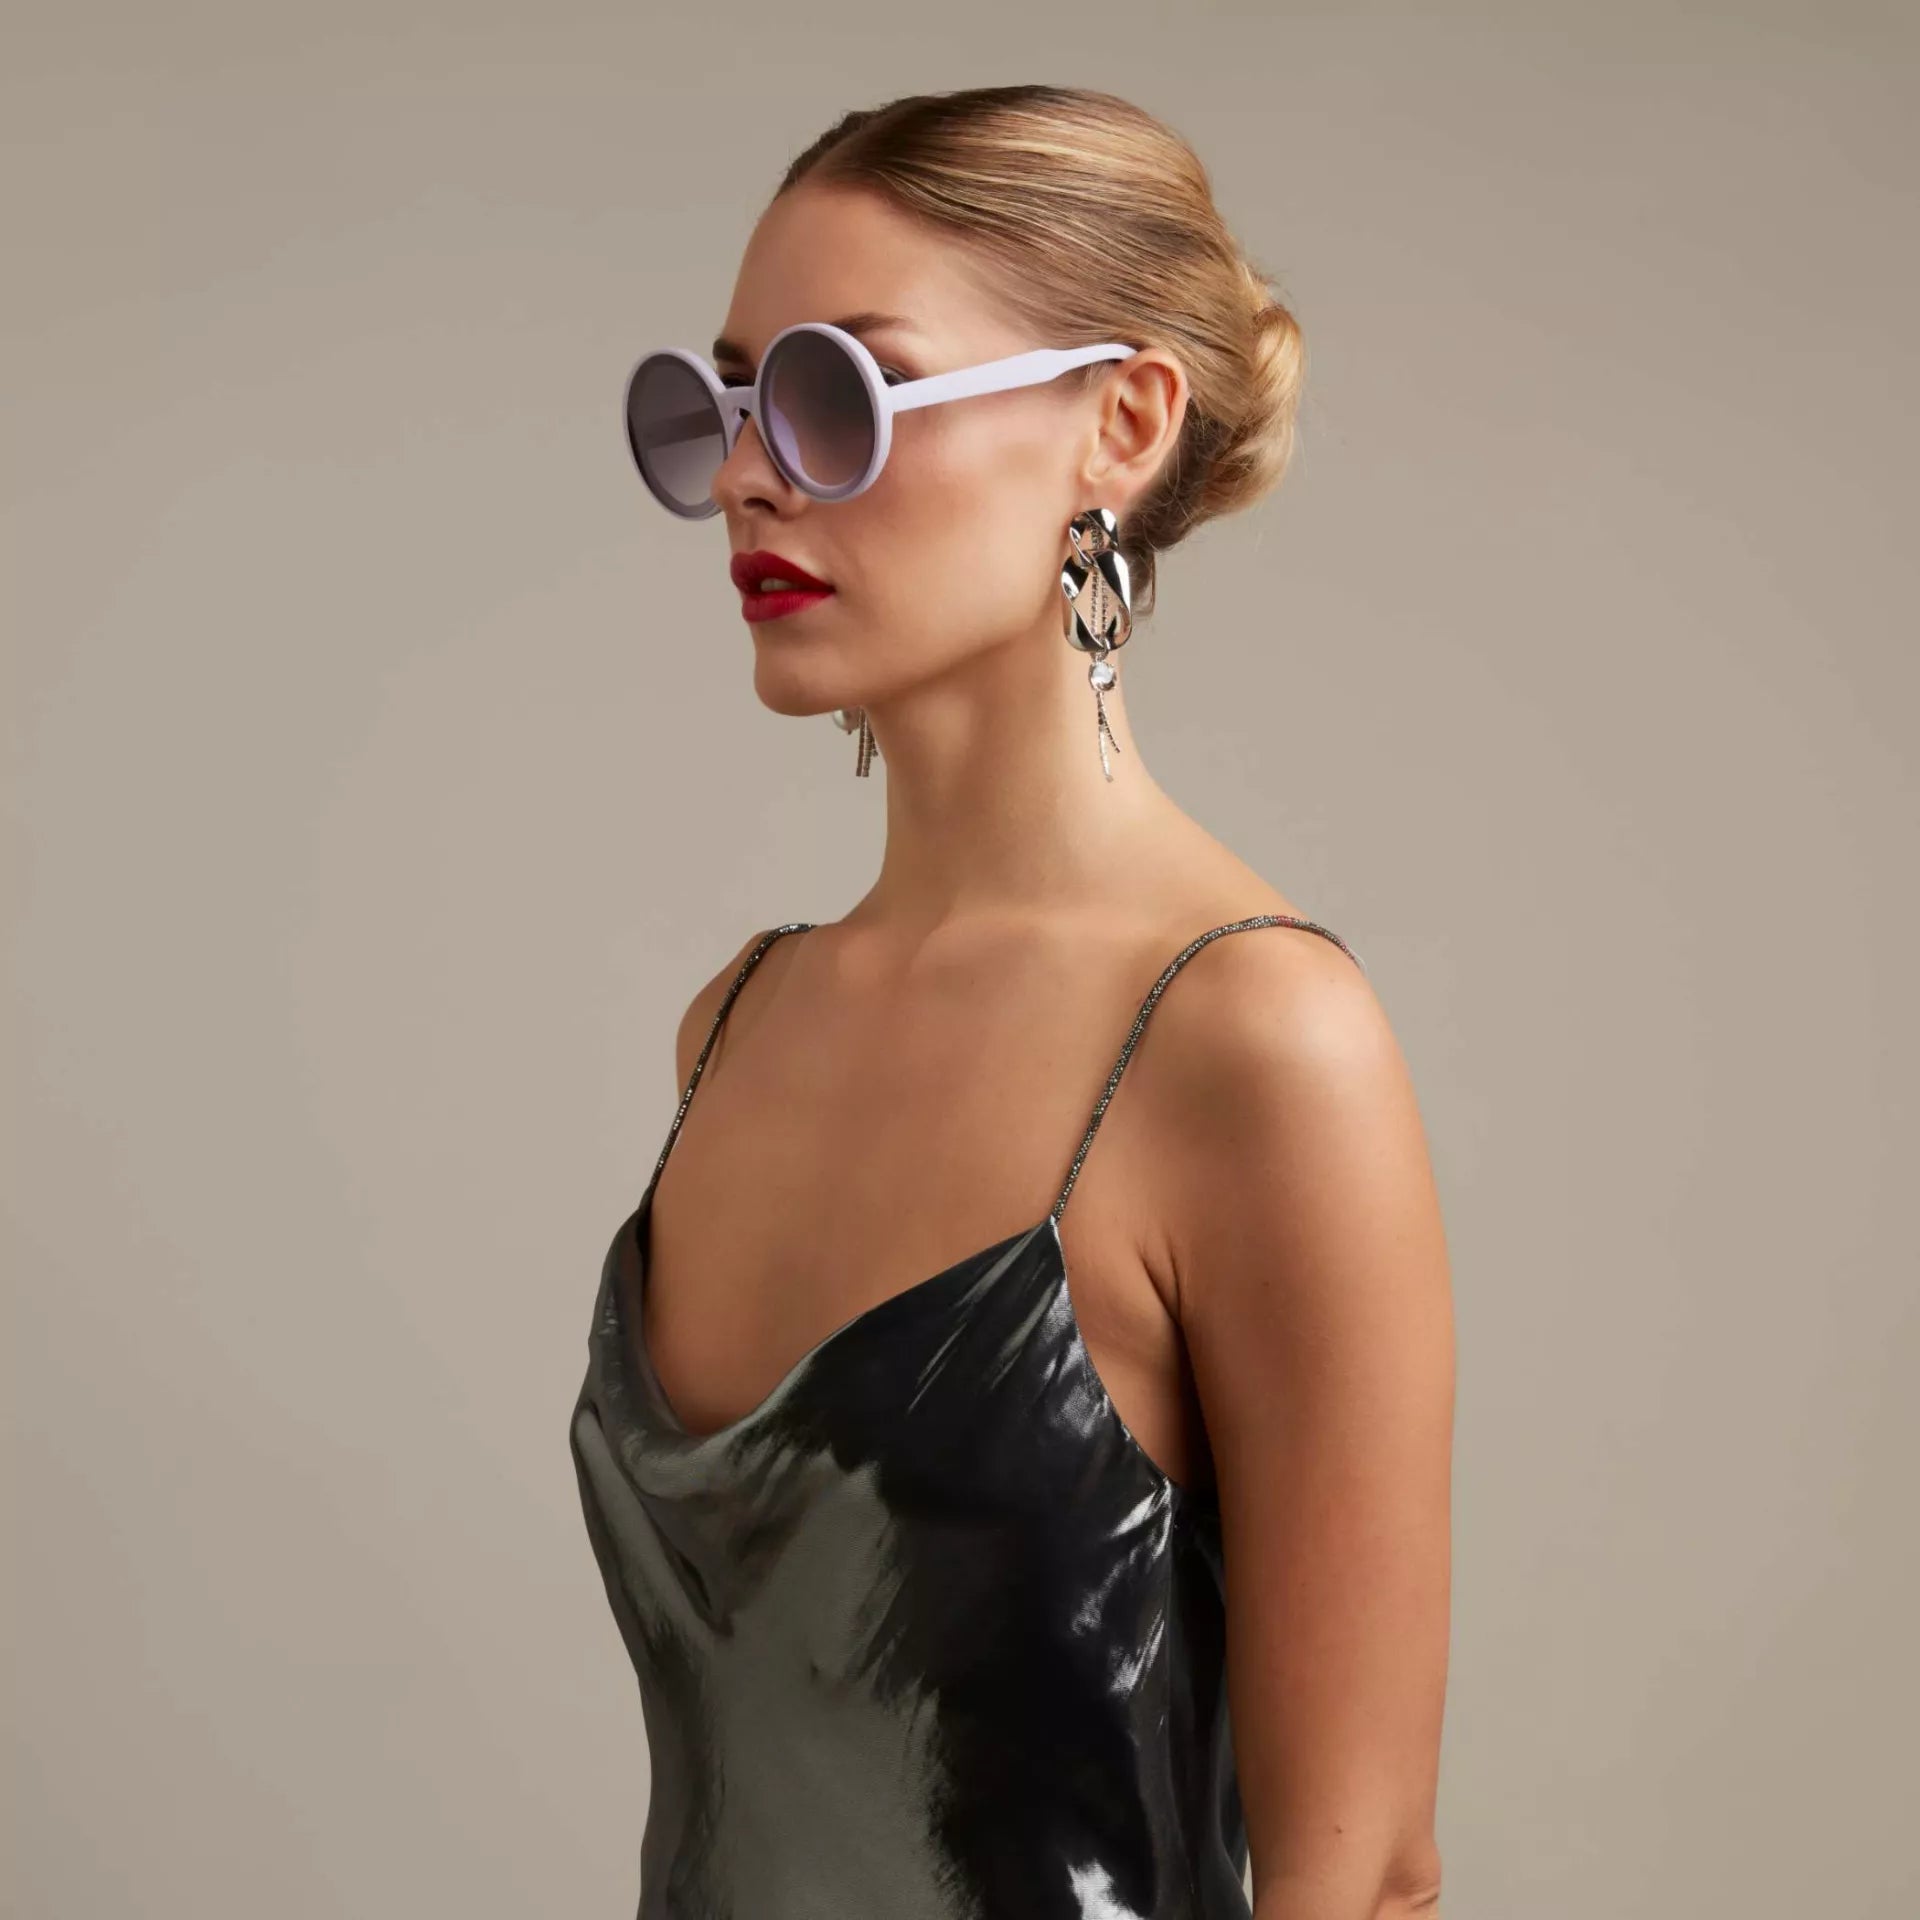 Fabulous Gifts Okkia Sunglasses Tondo Lilac Breeze by Weirs of Baggot Street